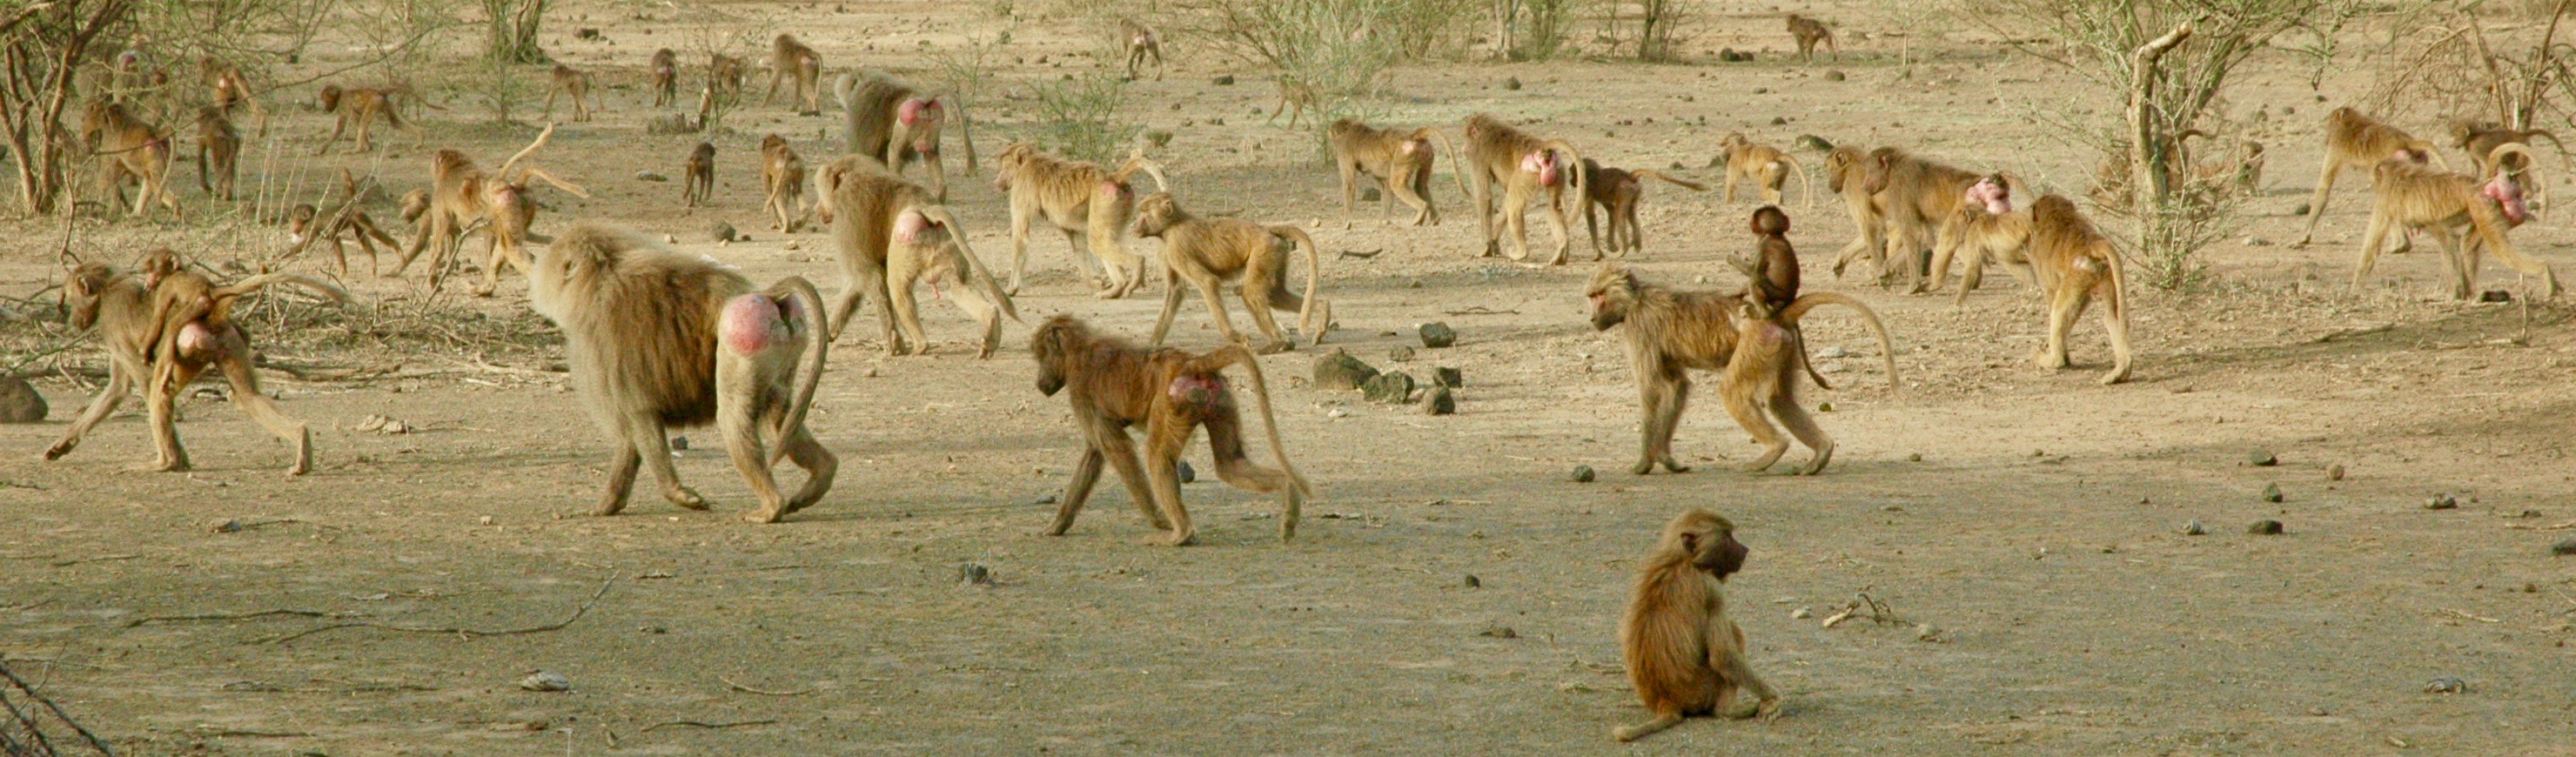 baboons walking